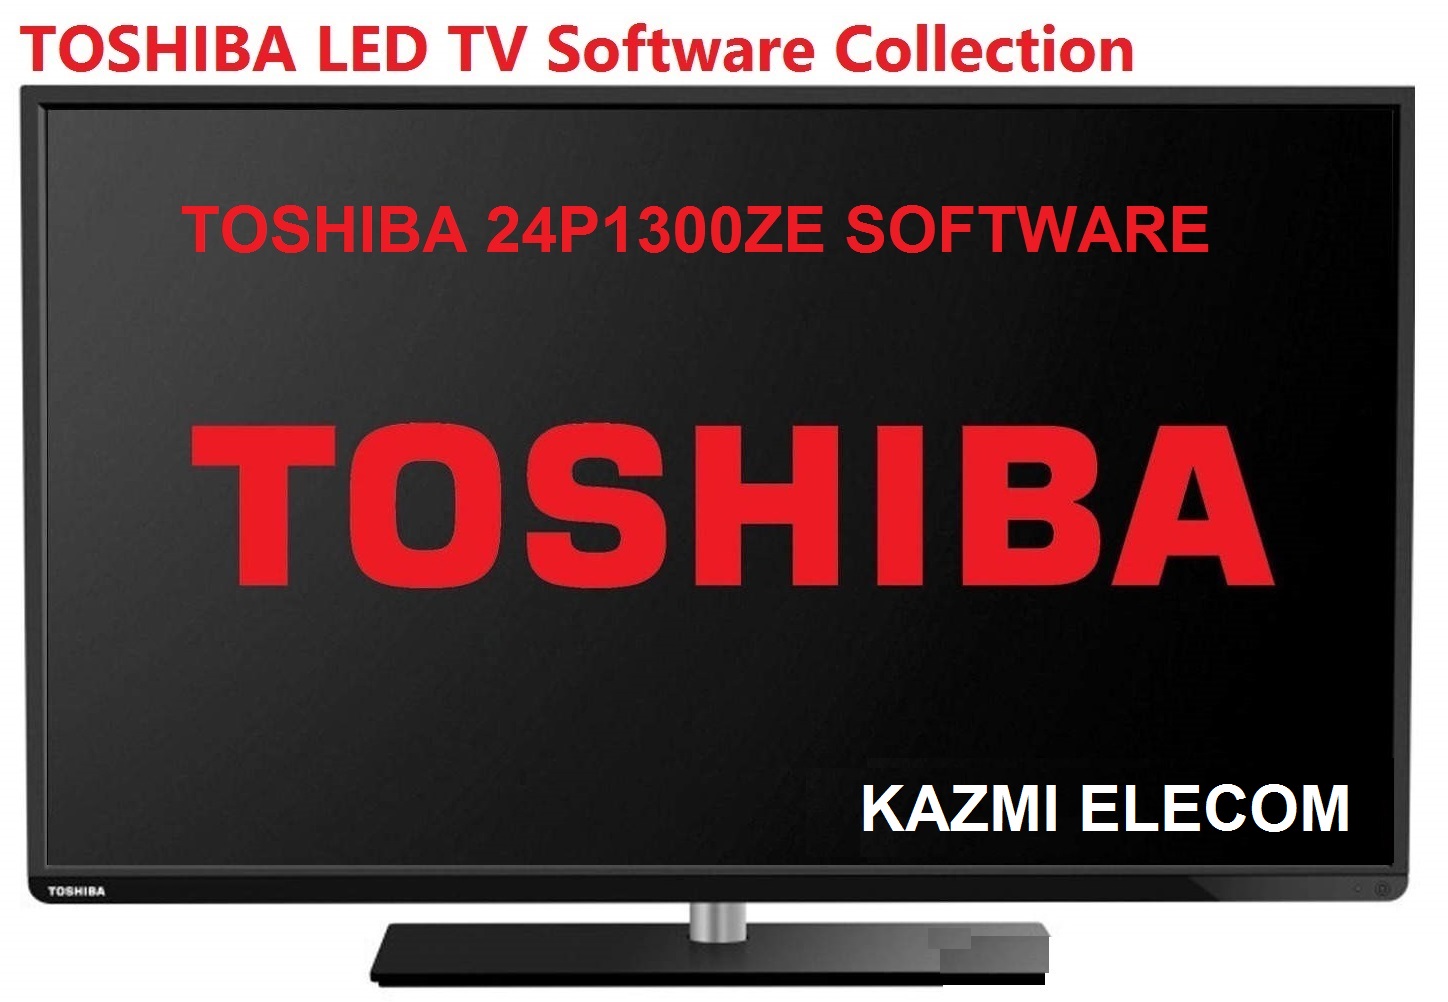 Toshiba 24P1300Ze